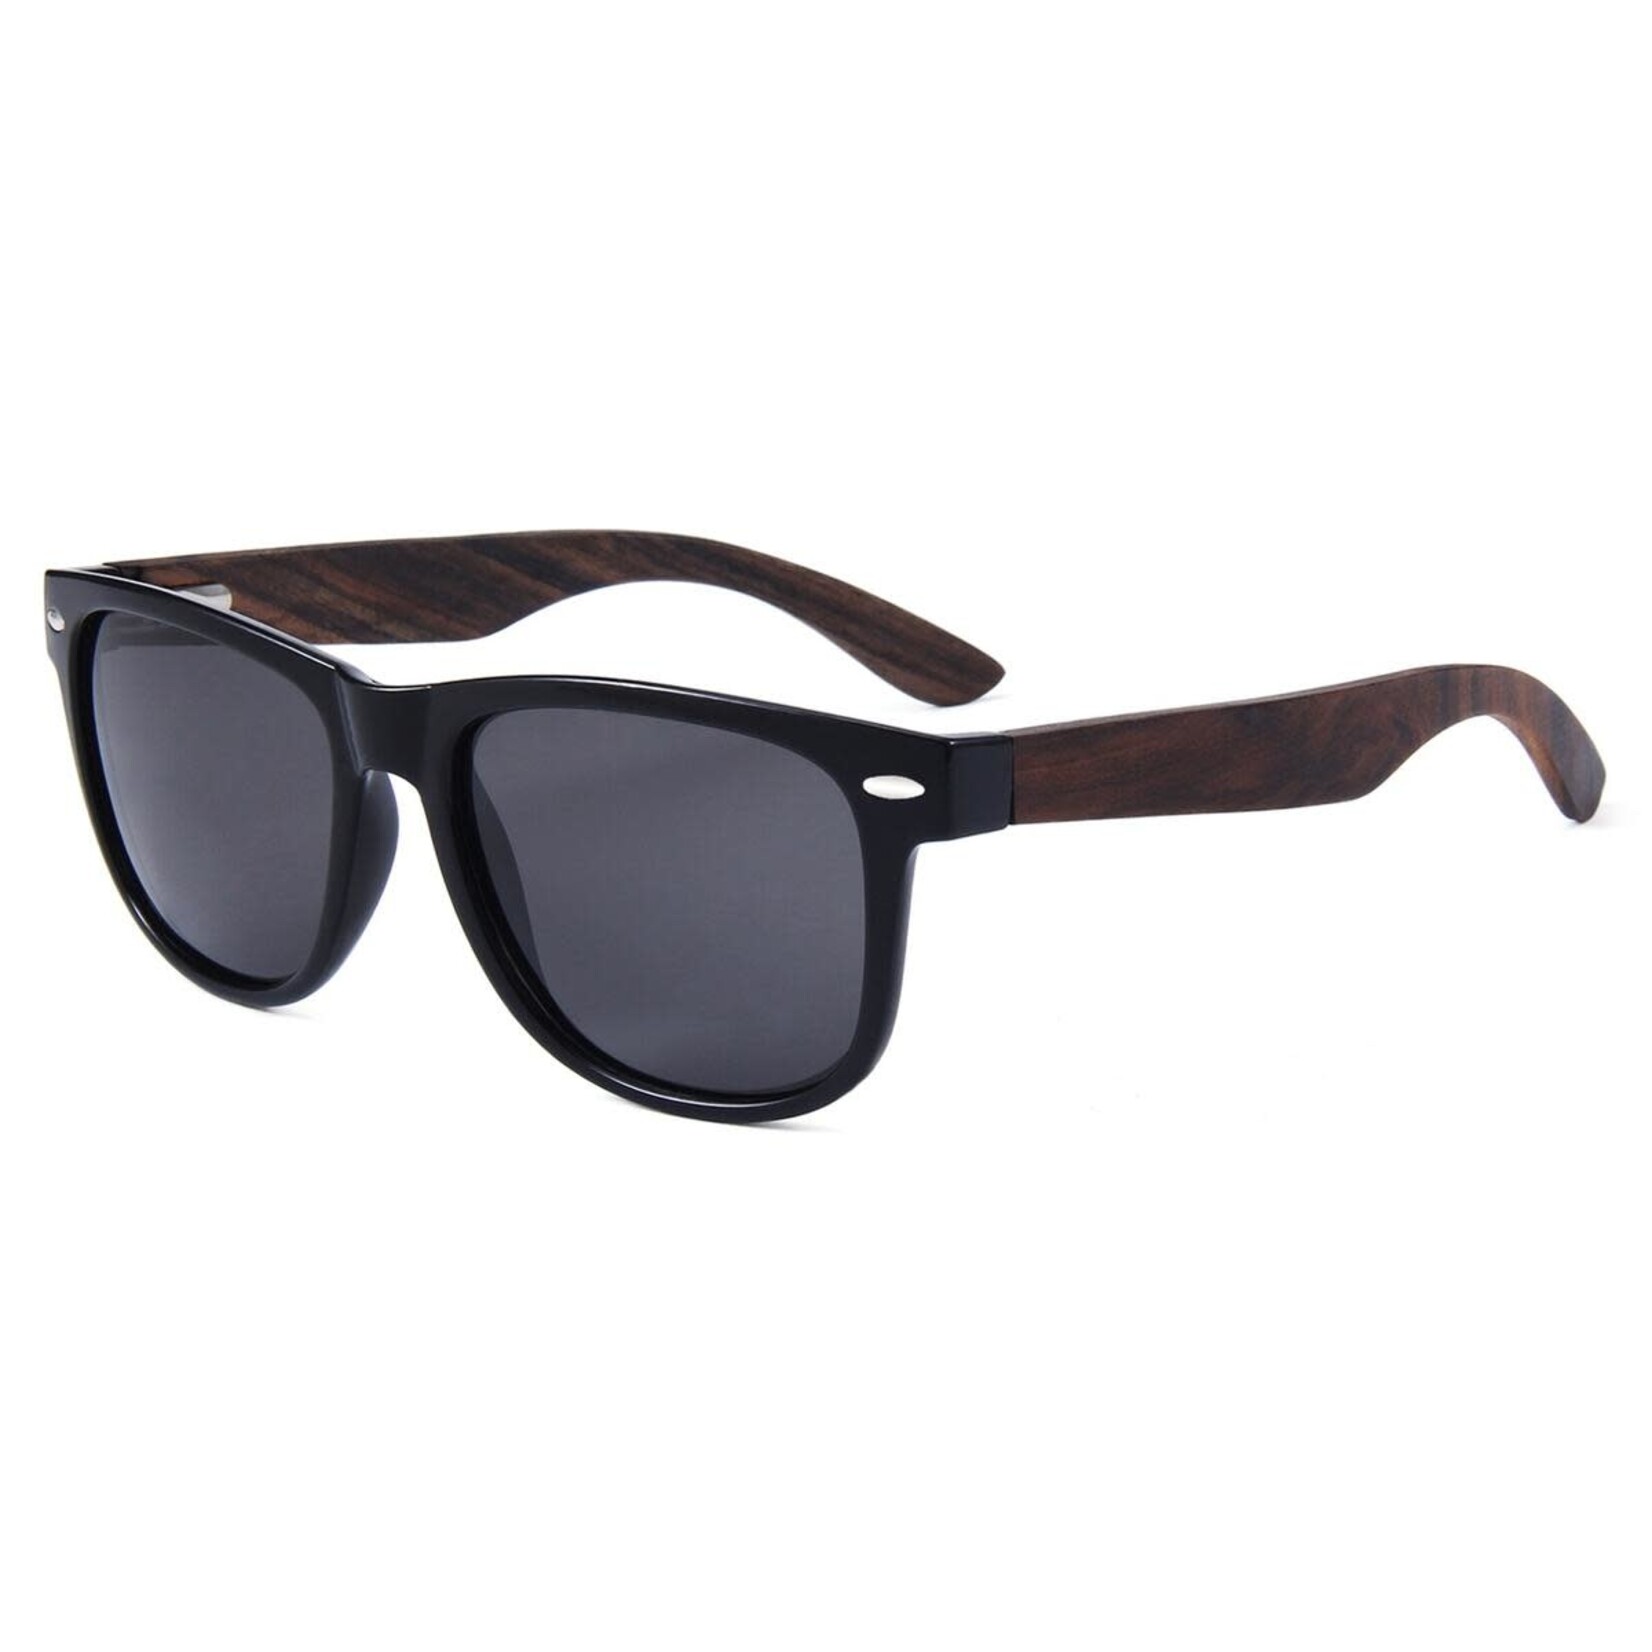 Kuma Sunglasses Costa Rica Sunglasses - Black